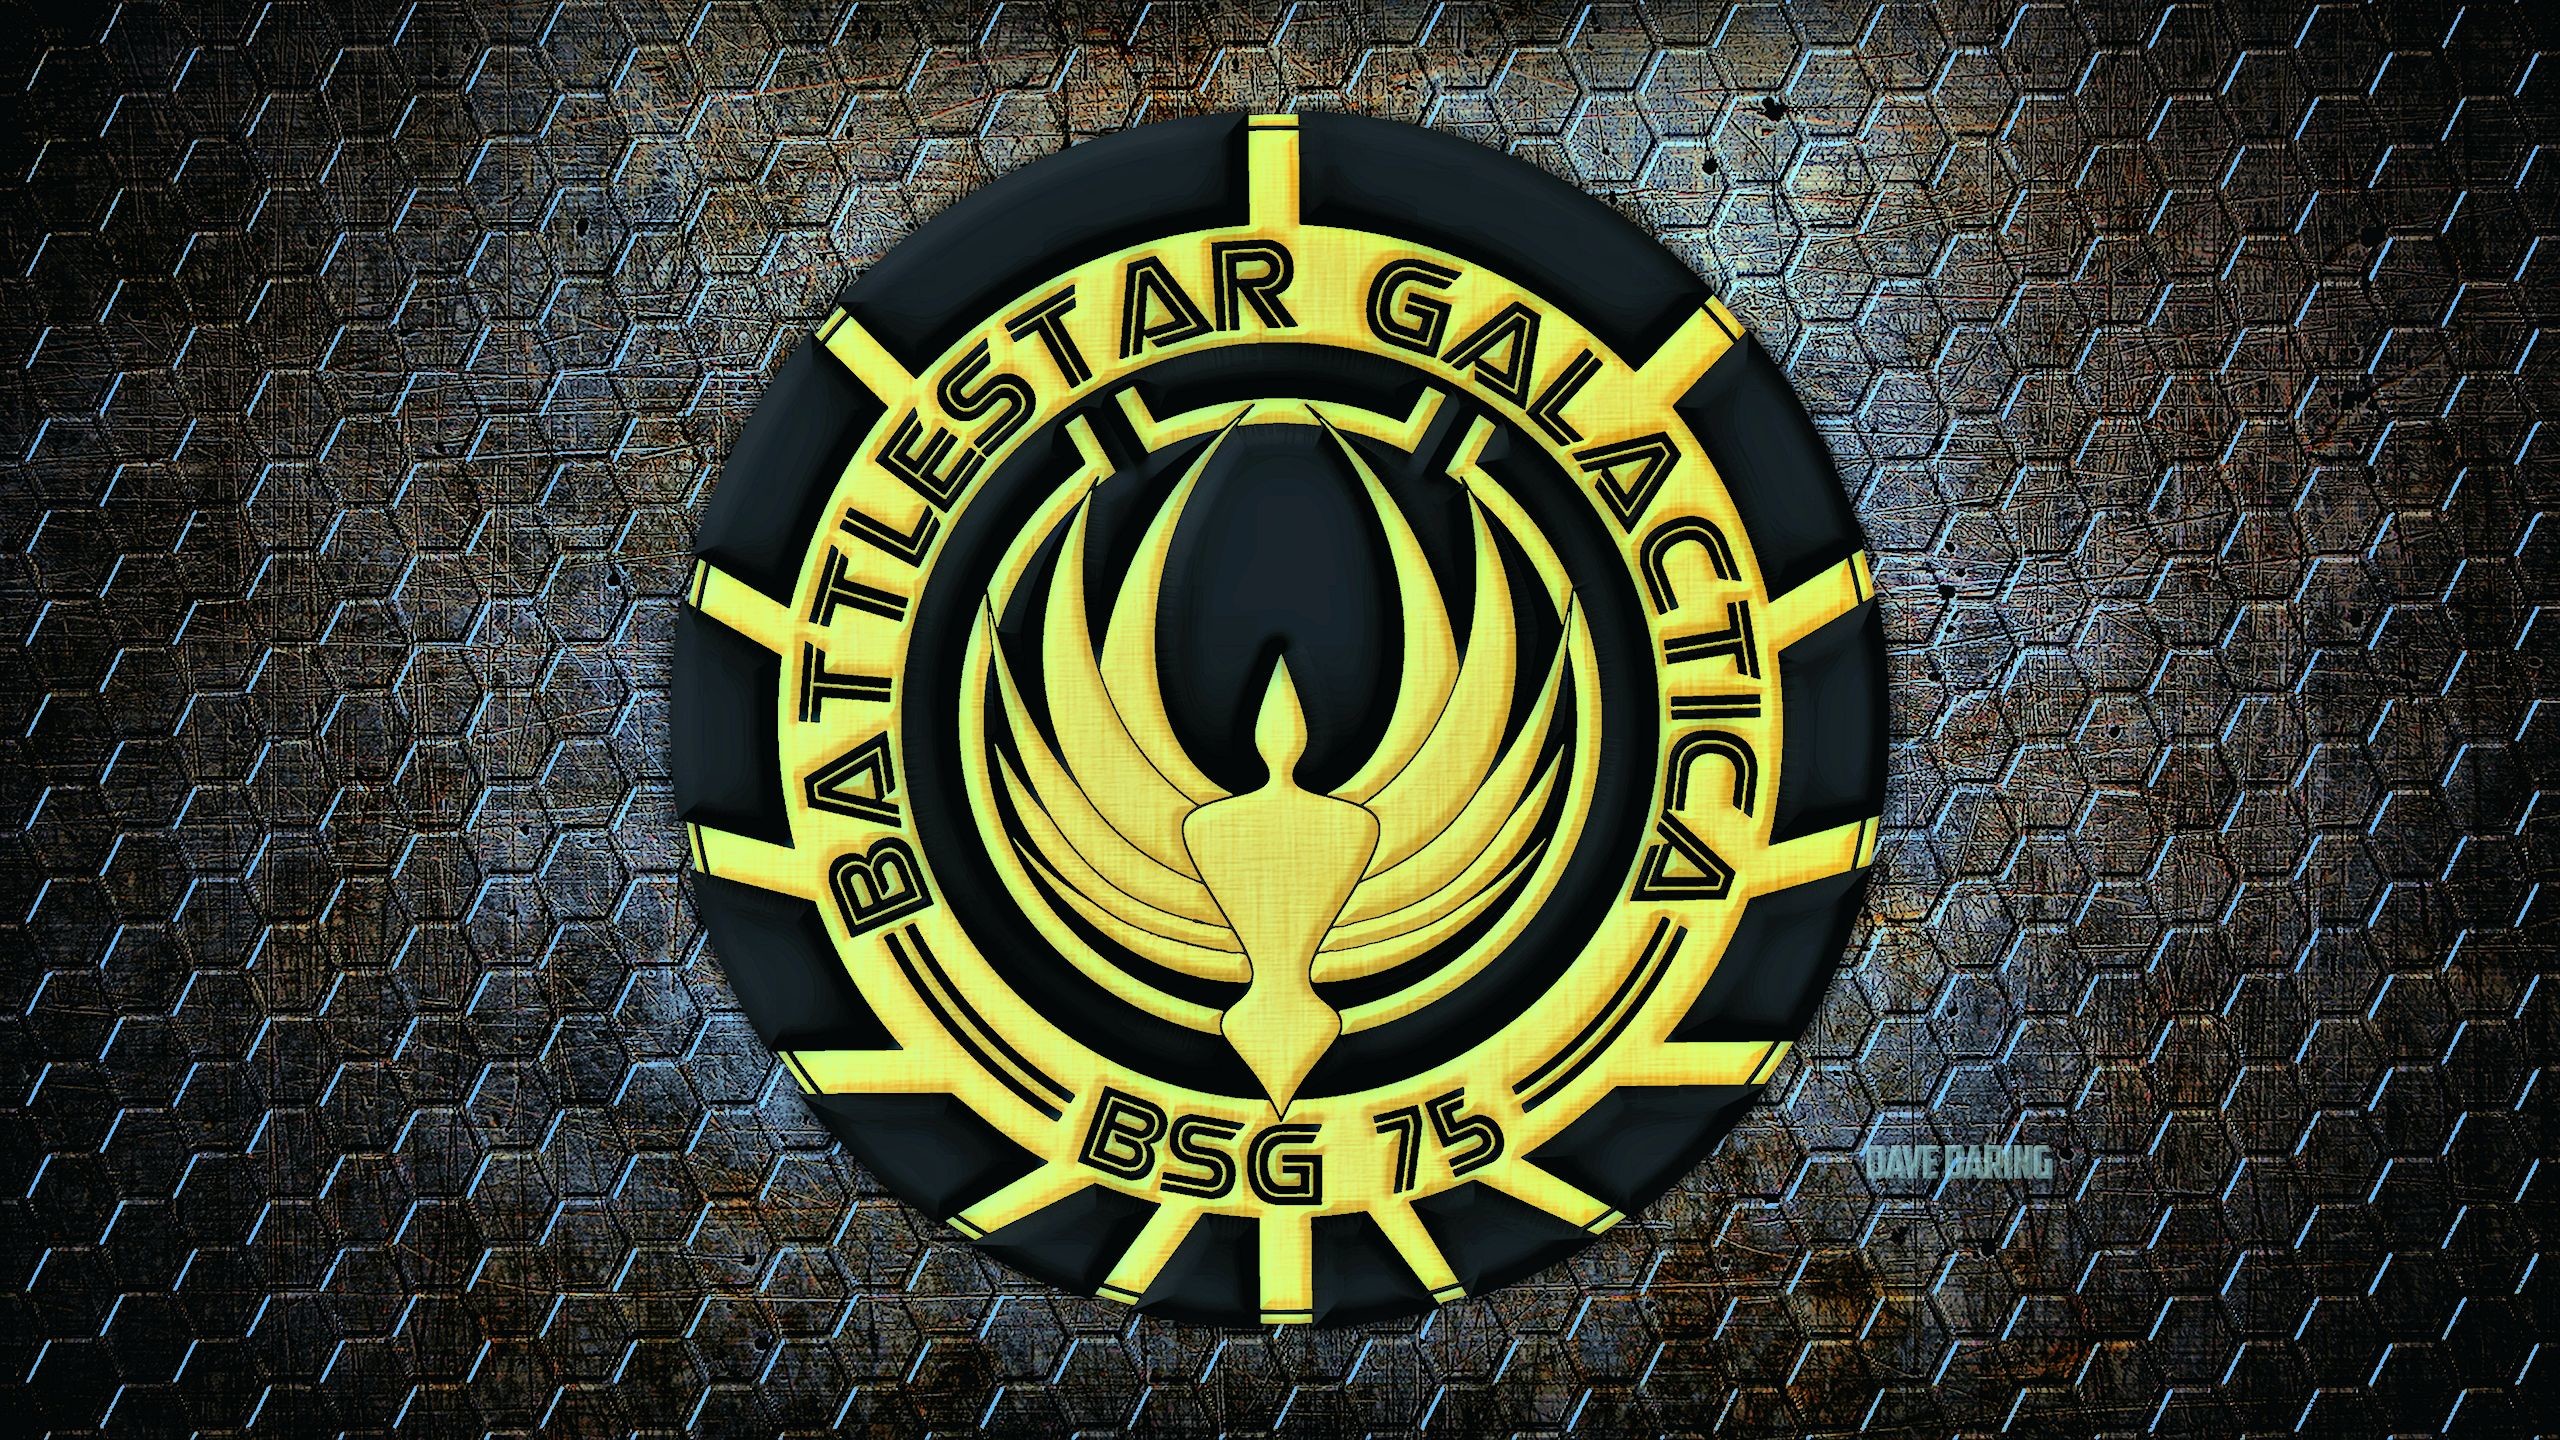 2560x1440 ... Battlestar Galactica BSG 75 by Dave-Daring